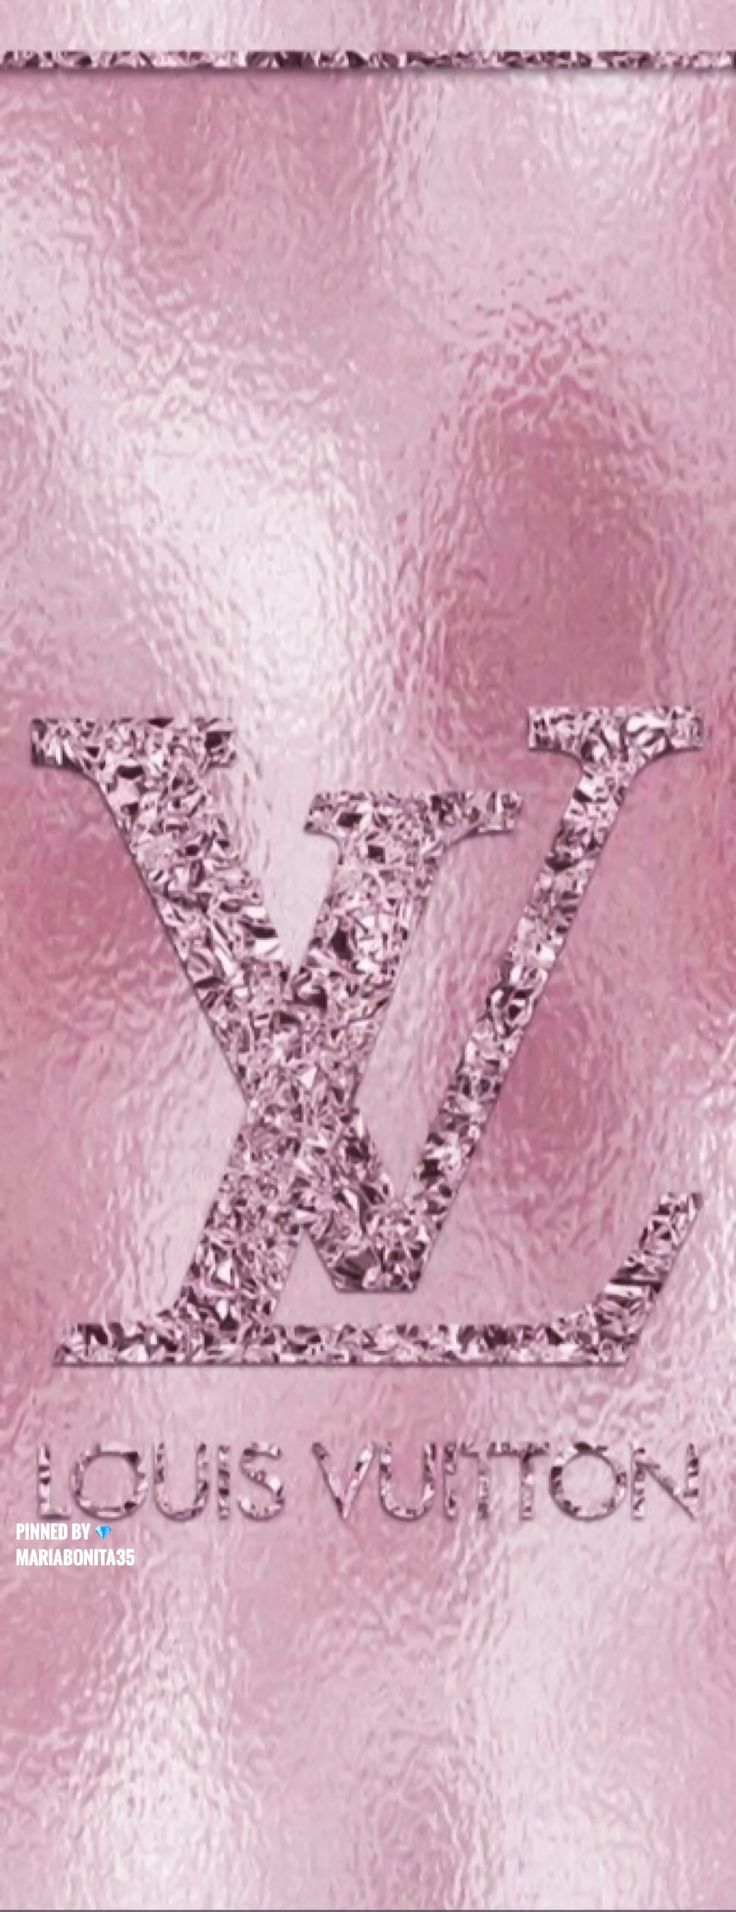 Pink Louis Vuitton Desktop Wallpapers